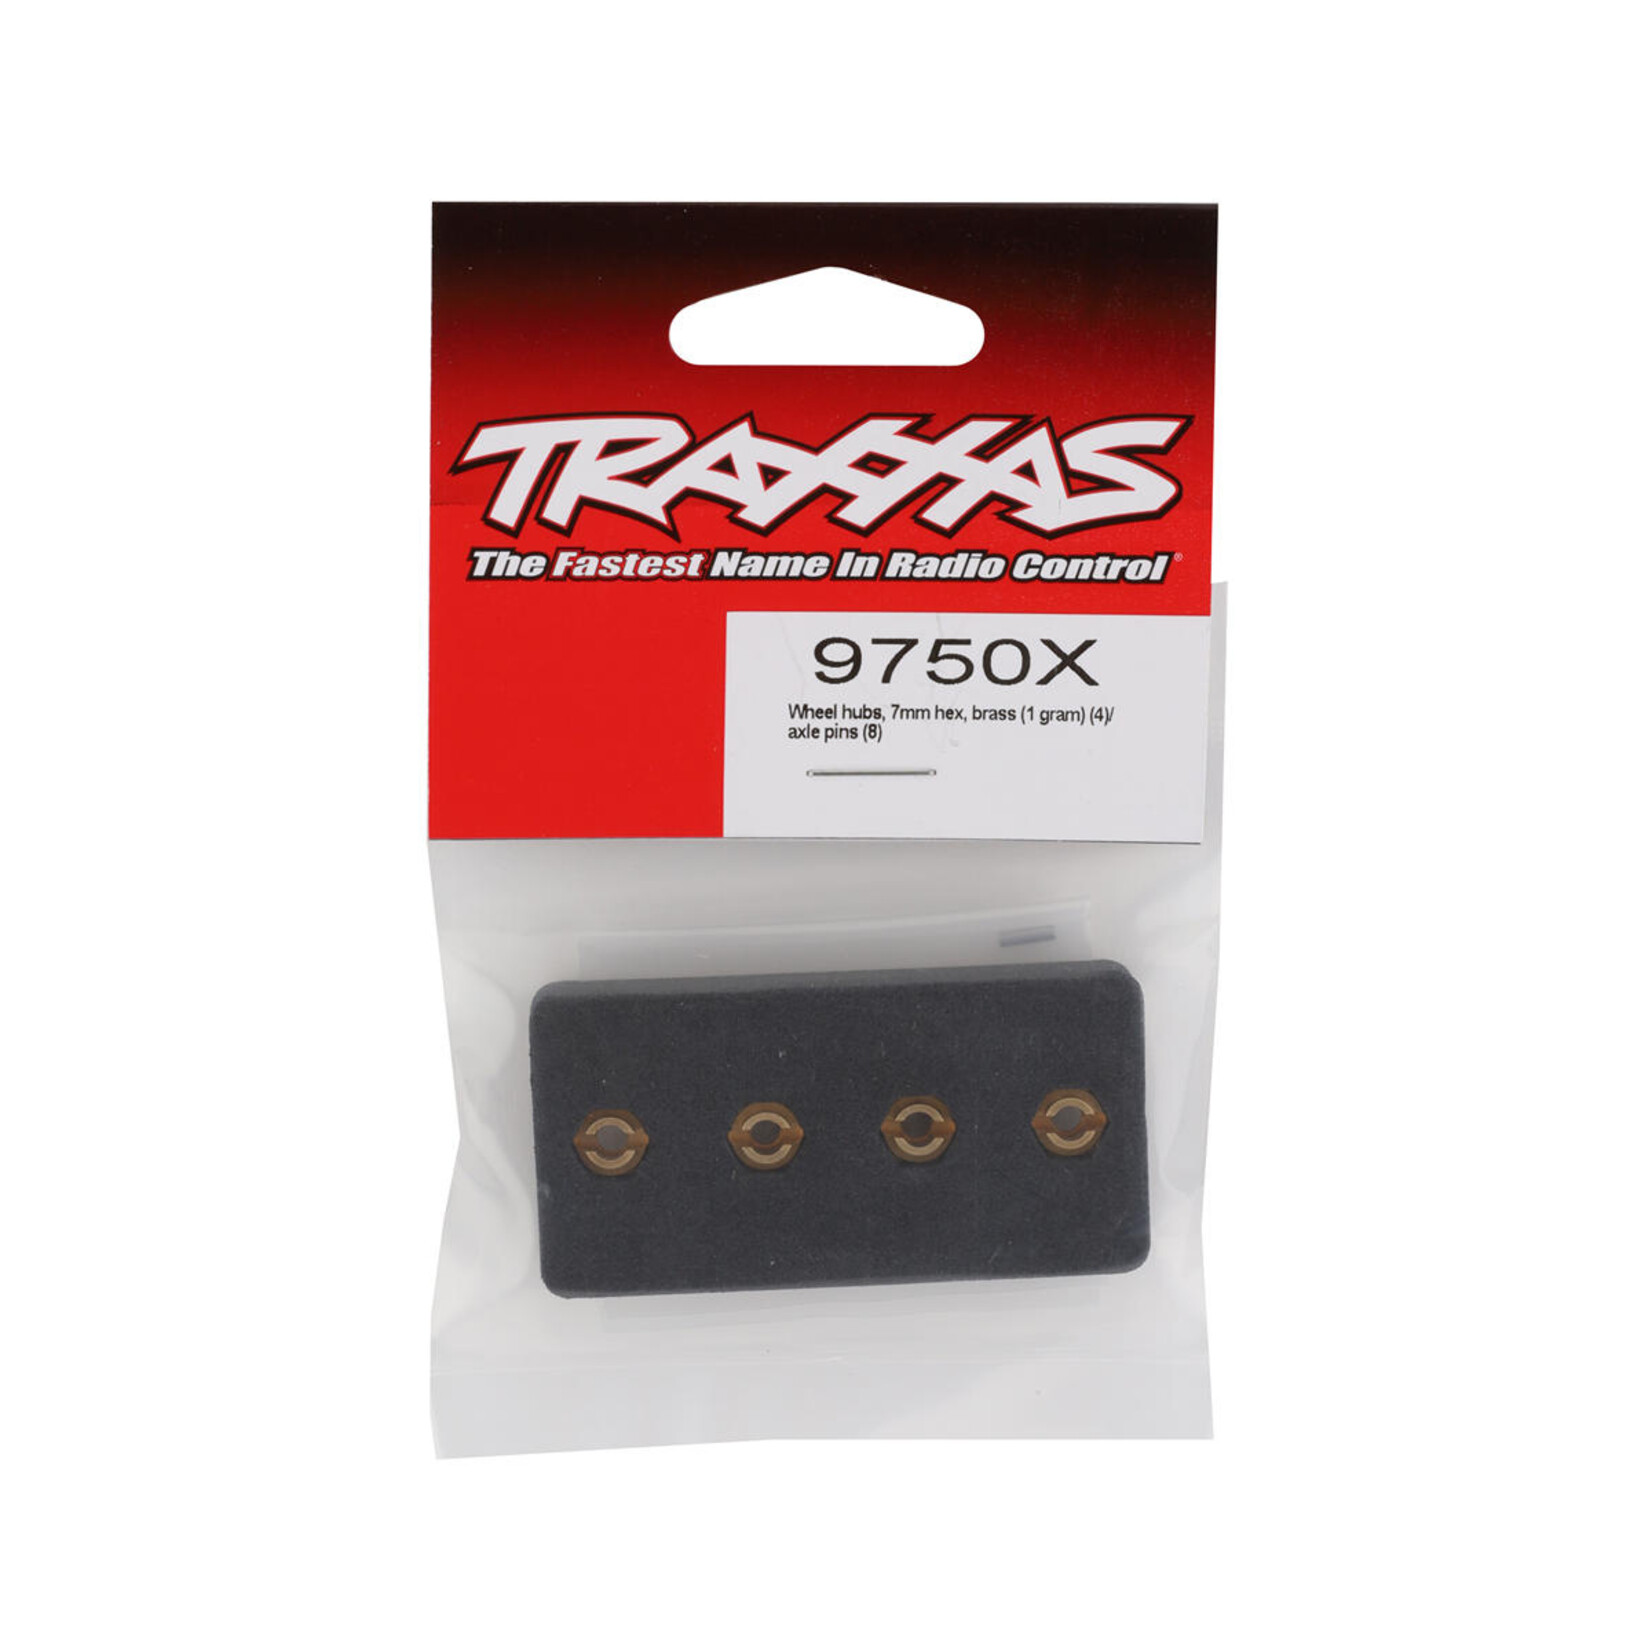 Traxxas Traxxas TRX-4M Brass Wheel Hexes (4) (4g) #9750X